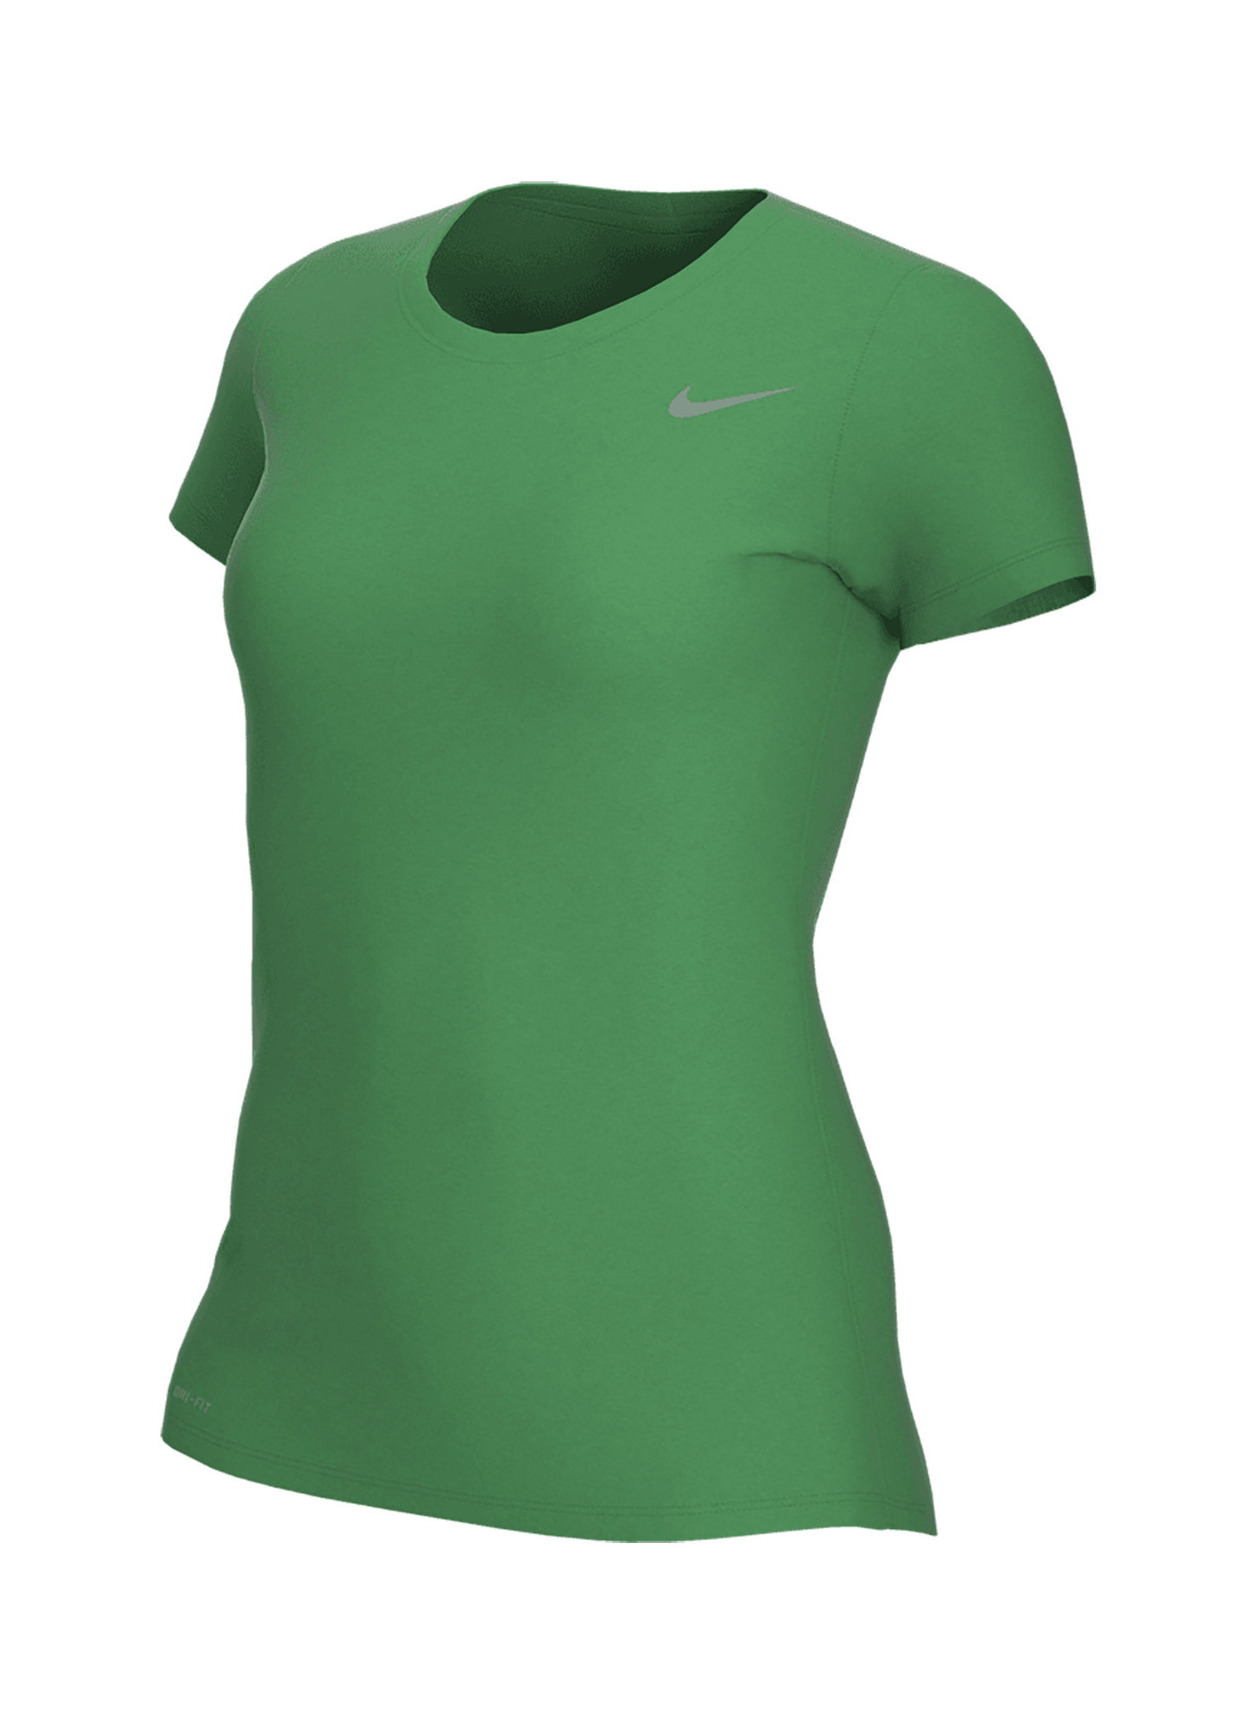 Nike Women's Apple Green Legend Training T-Shirt